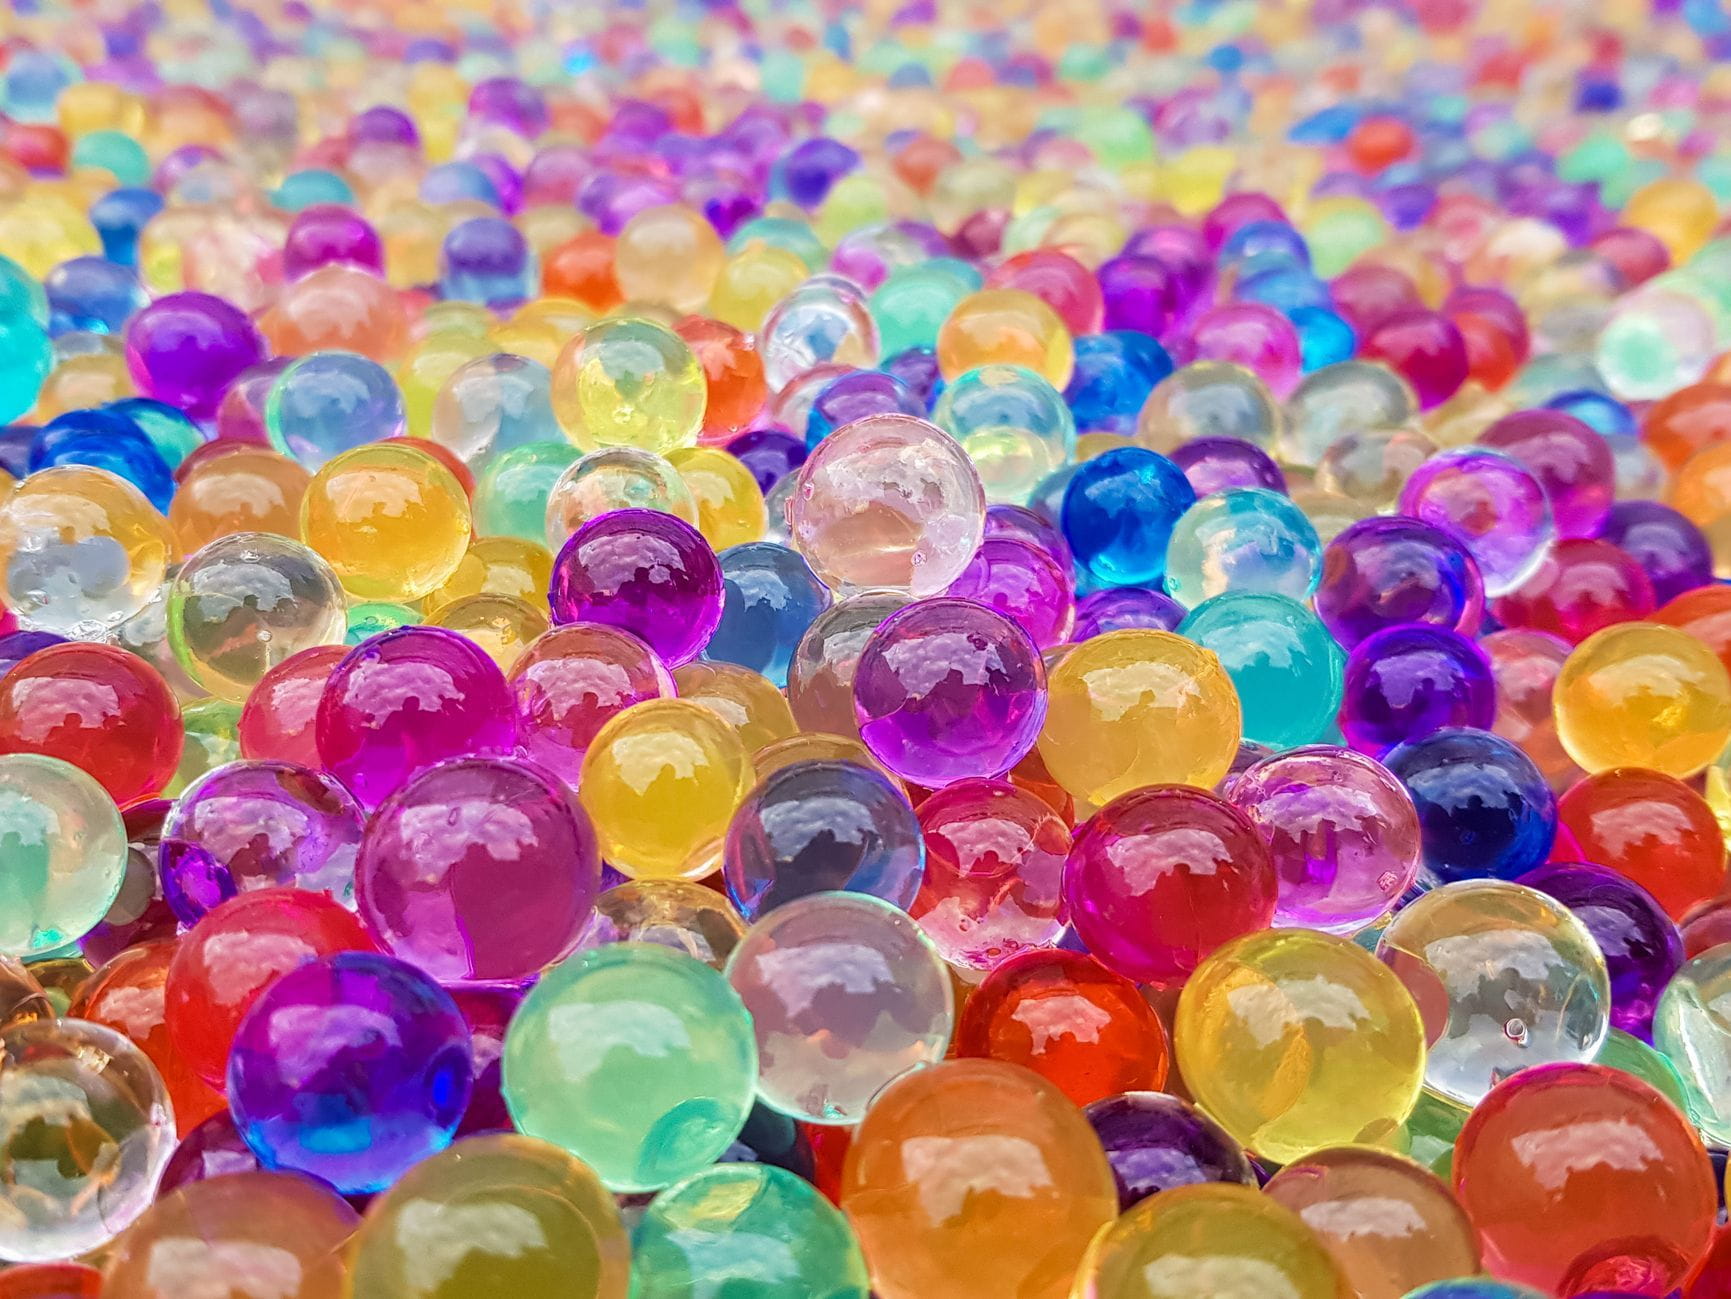 water beads